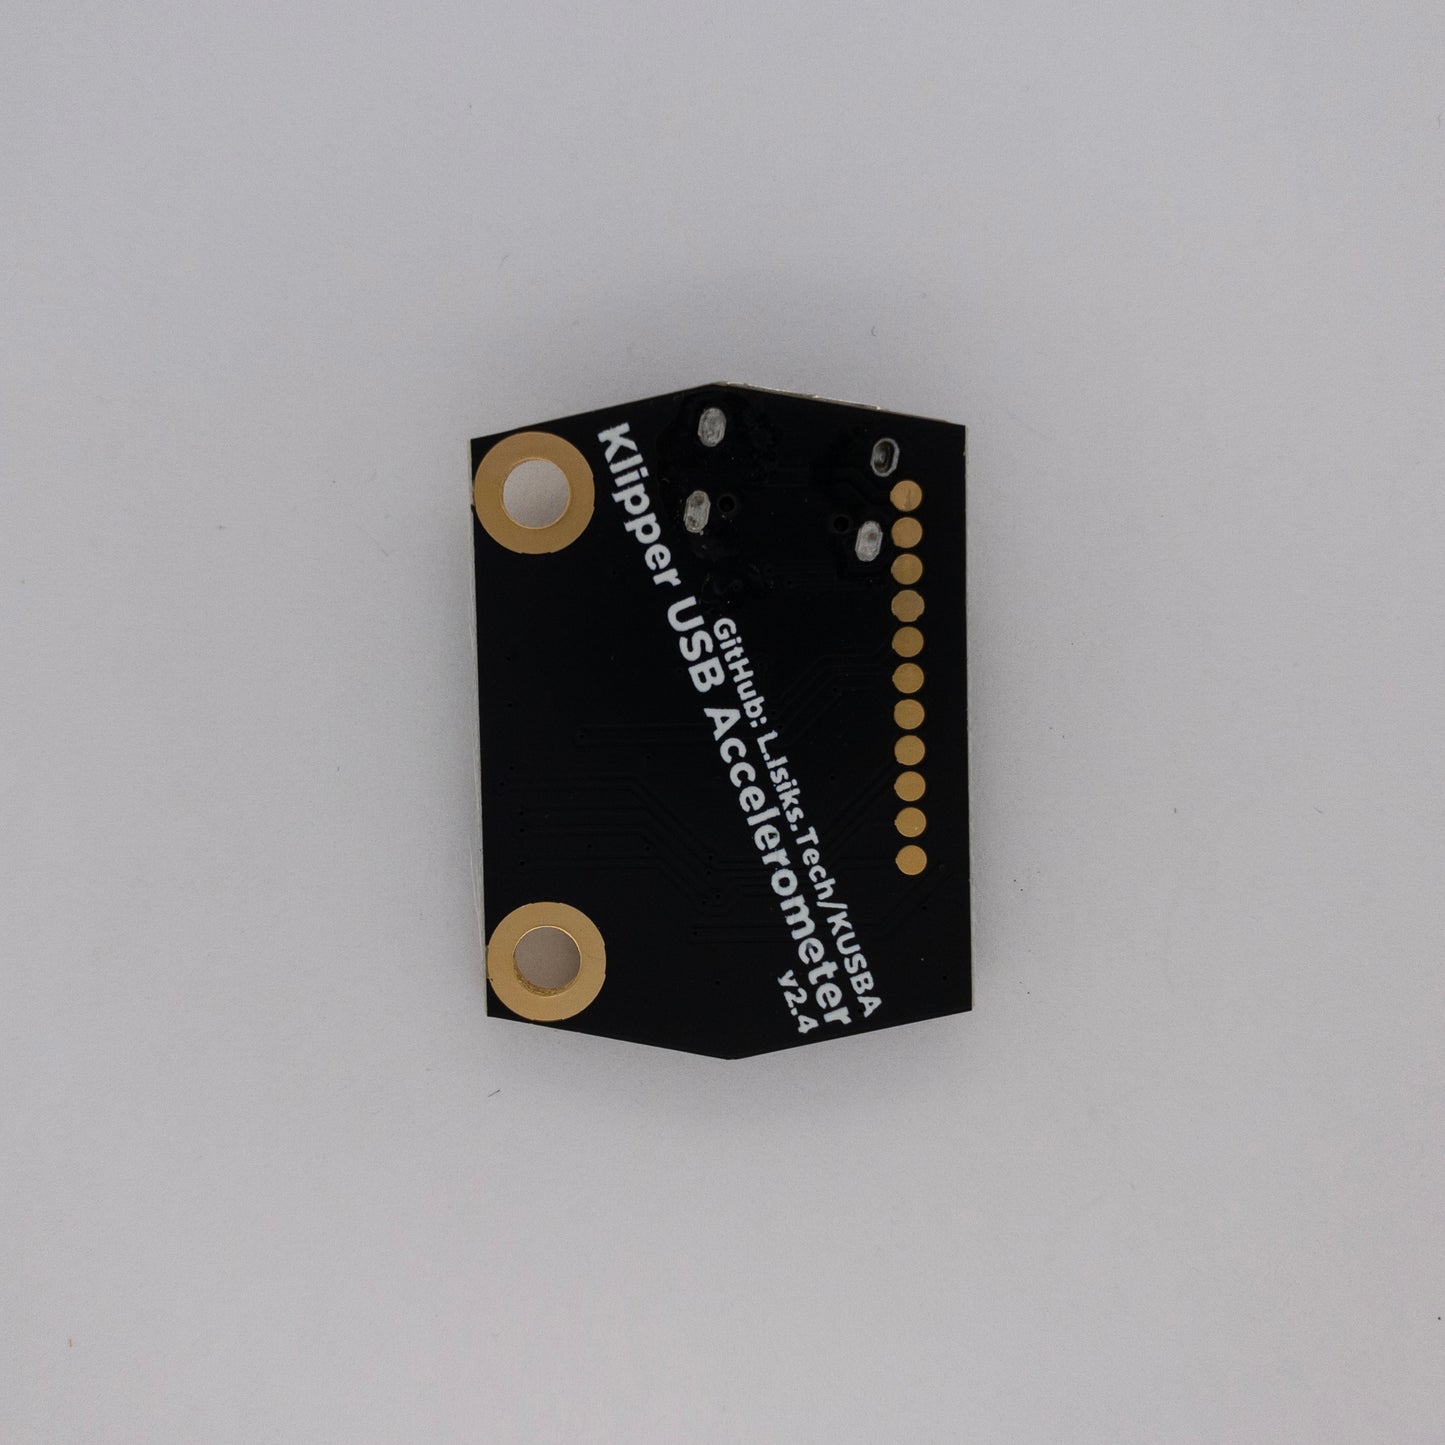 KUSBA: Klipper USB Accelerometer